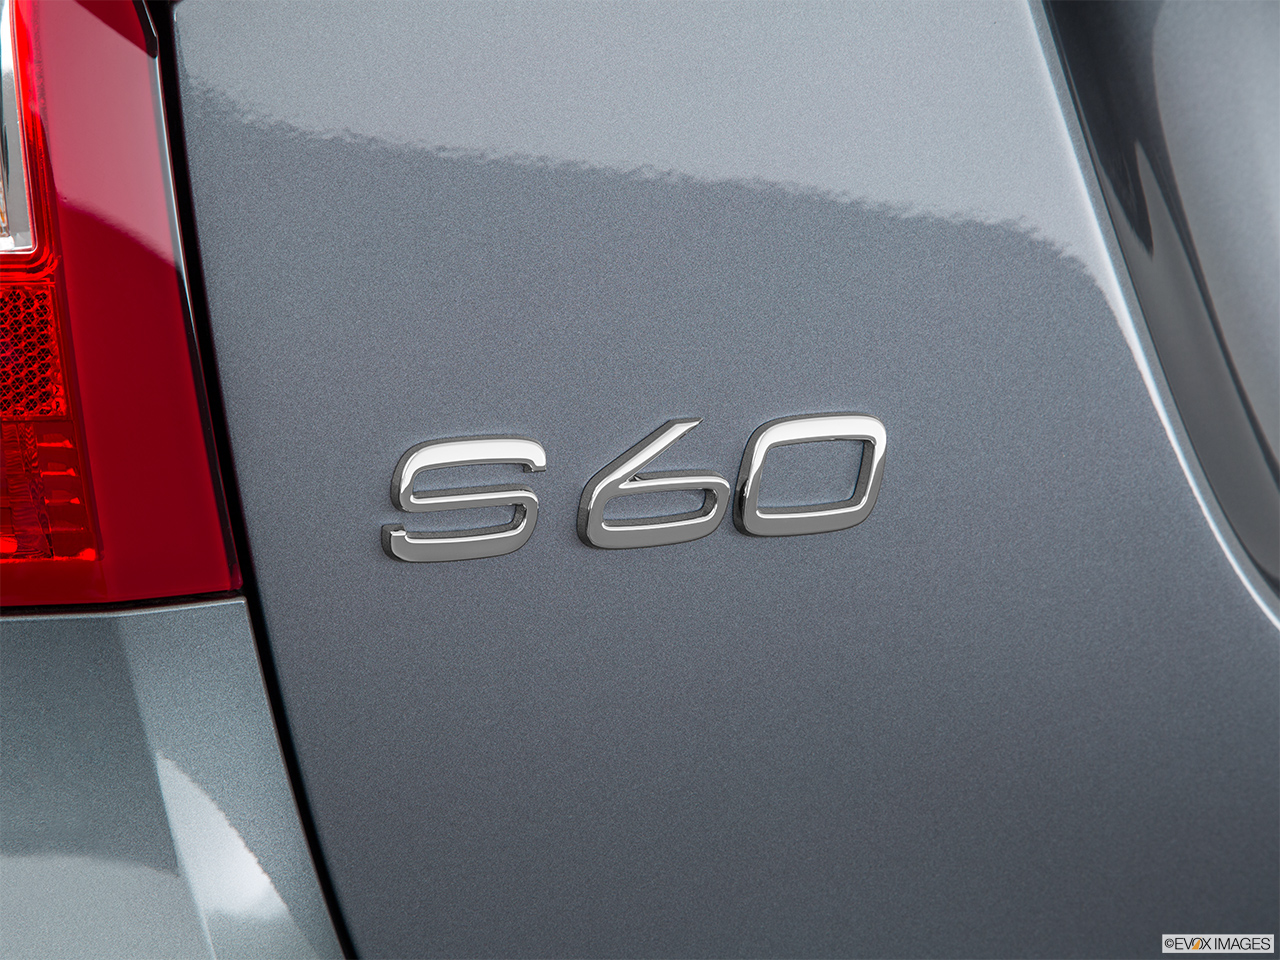 2017 Volvo S60 T5 Inscription Rear model badge/emblem 